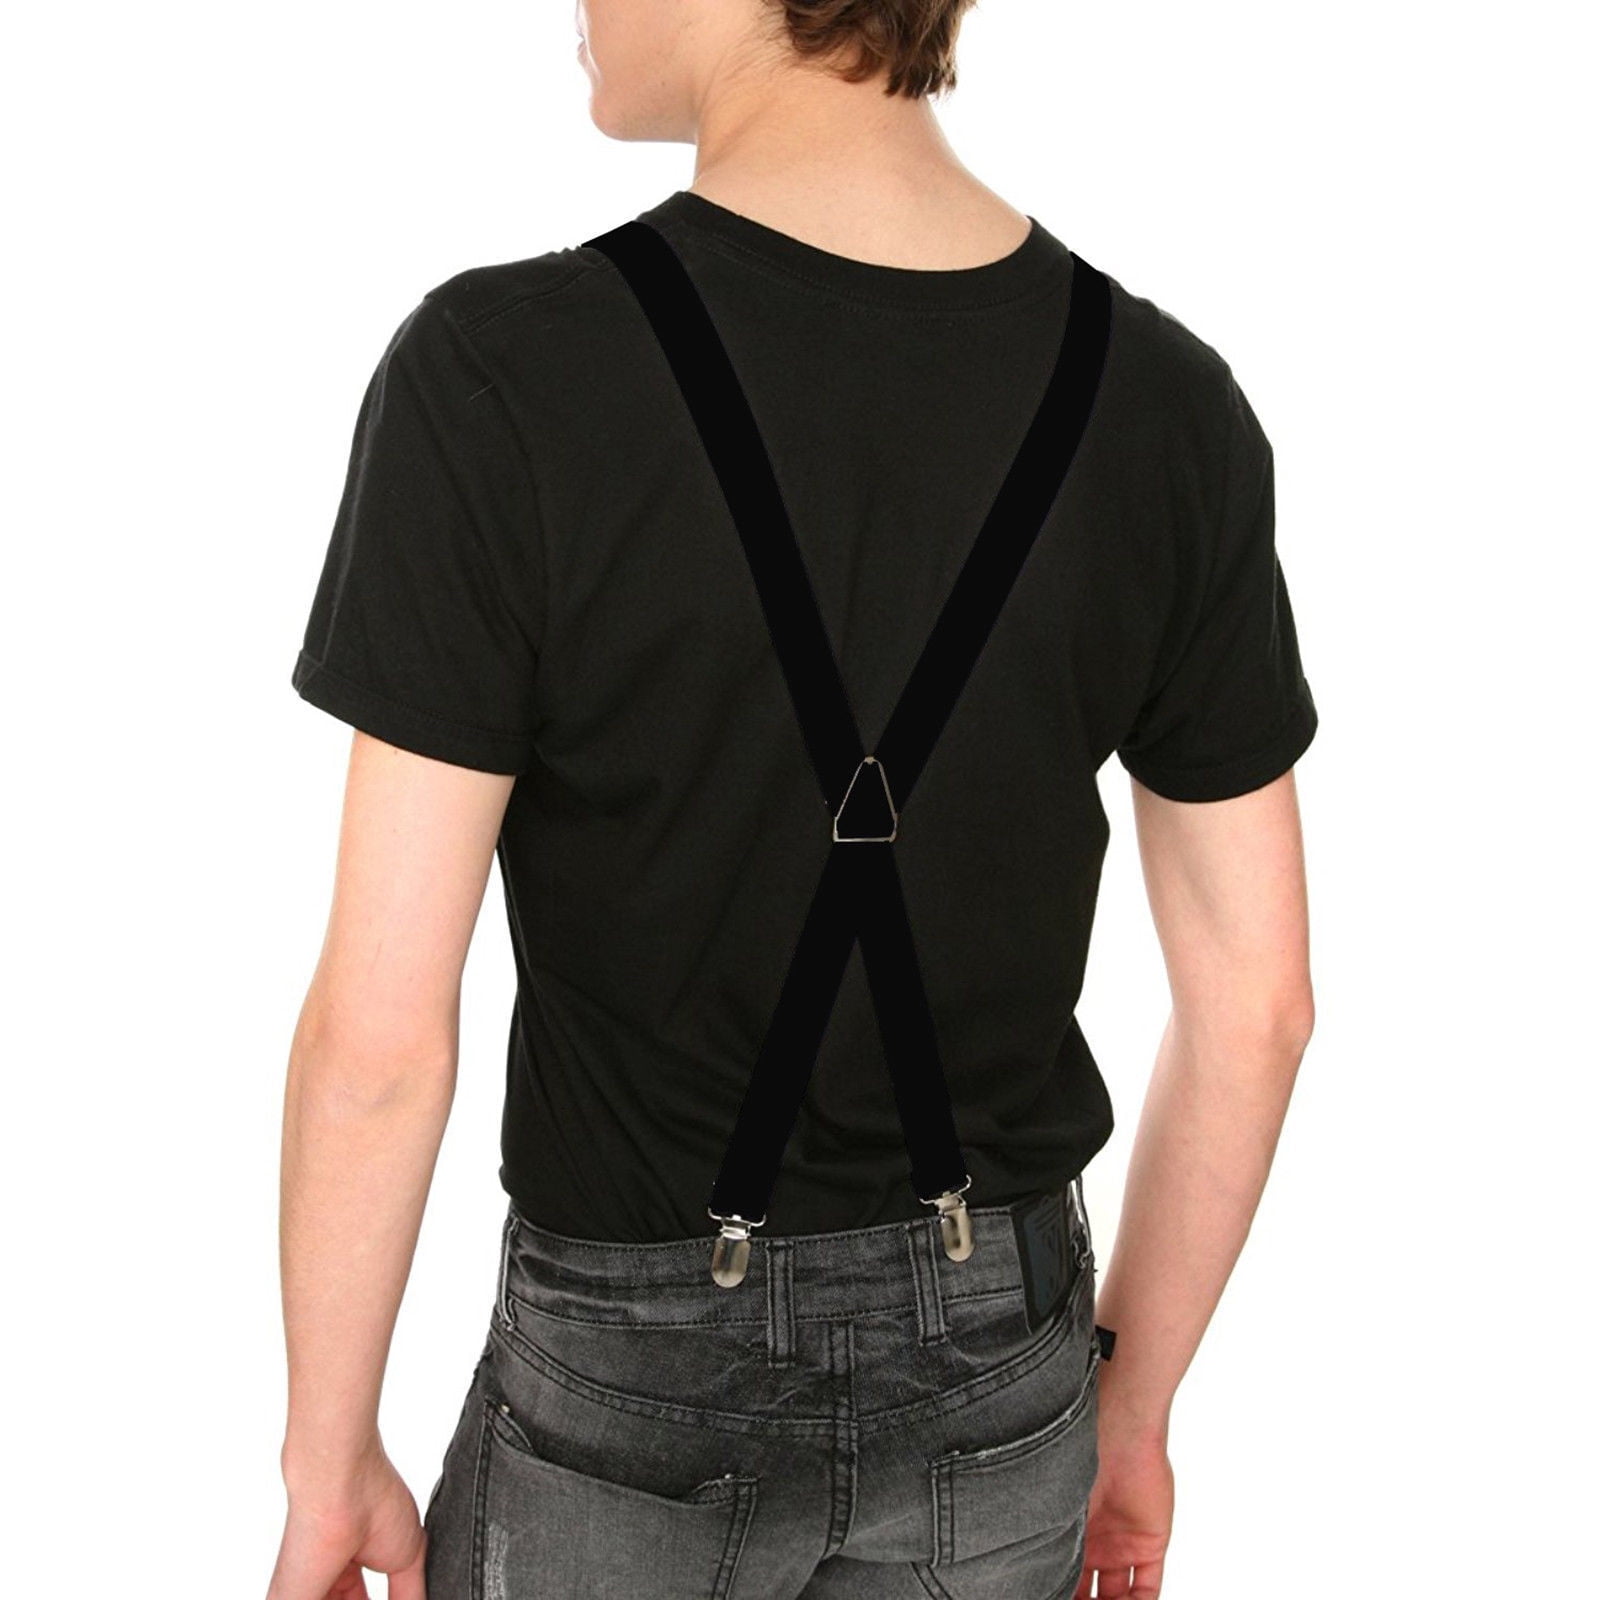 35mm Mens Braces Spandex Clip On X Shape Suspender Elastic and Adjustable